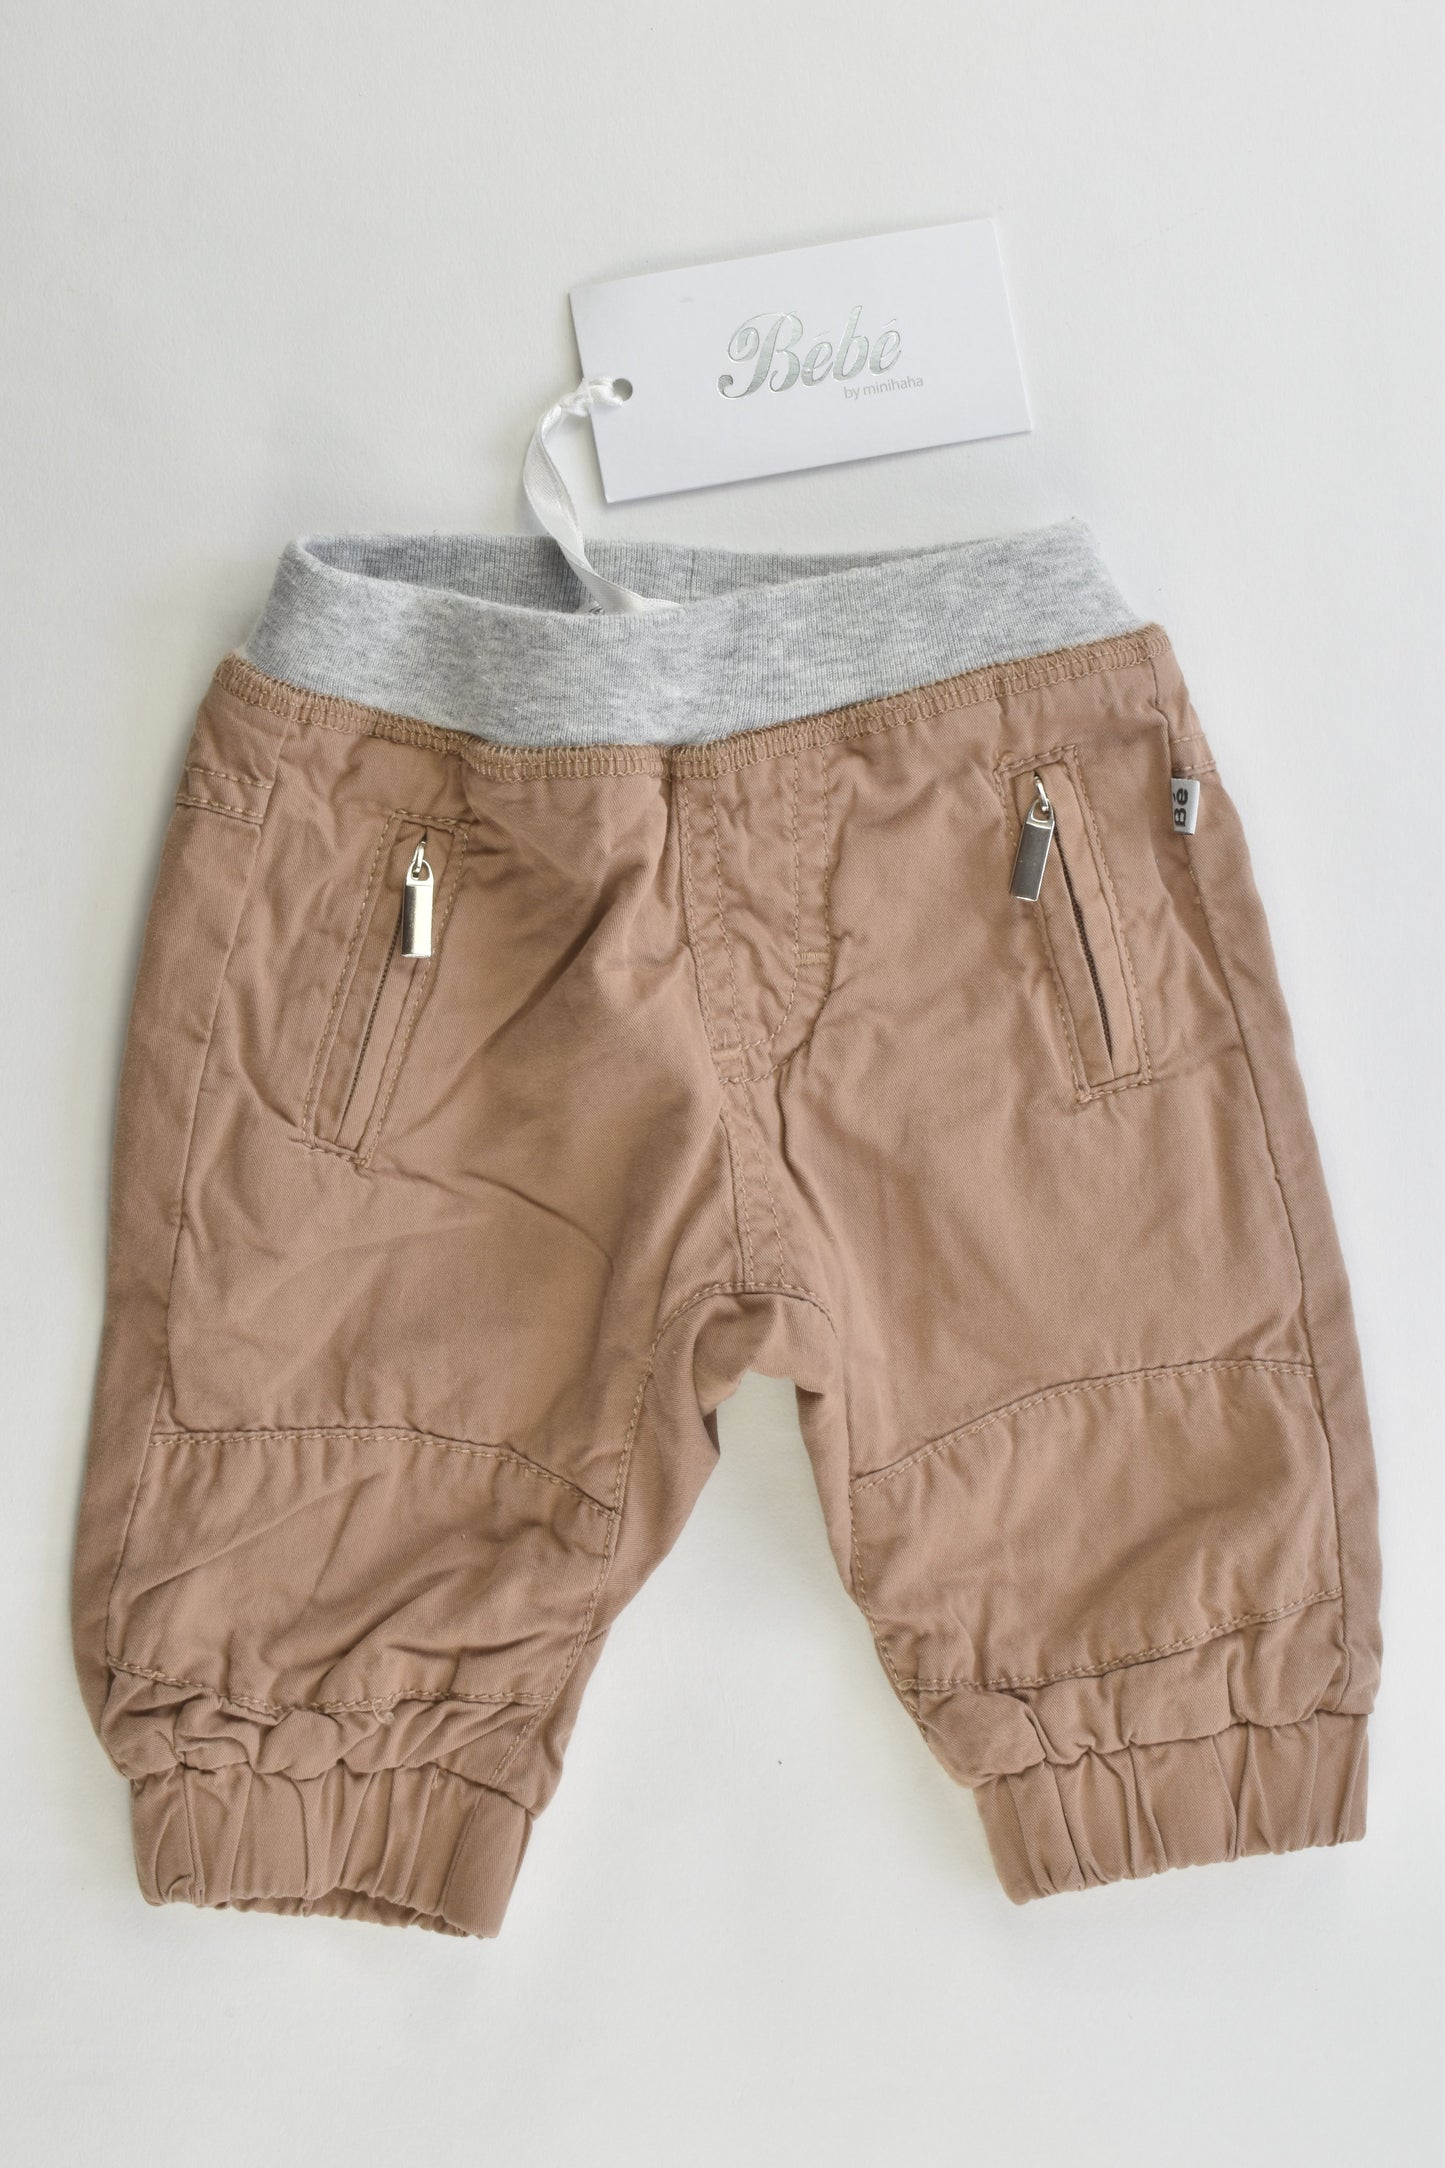 NEW Bébé by Minihaha Size 000 (0-3 months) Lined Pants